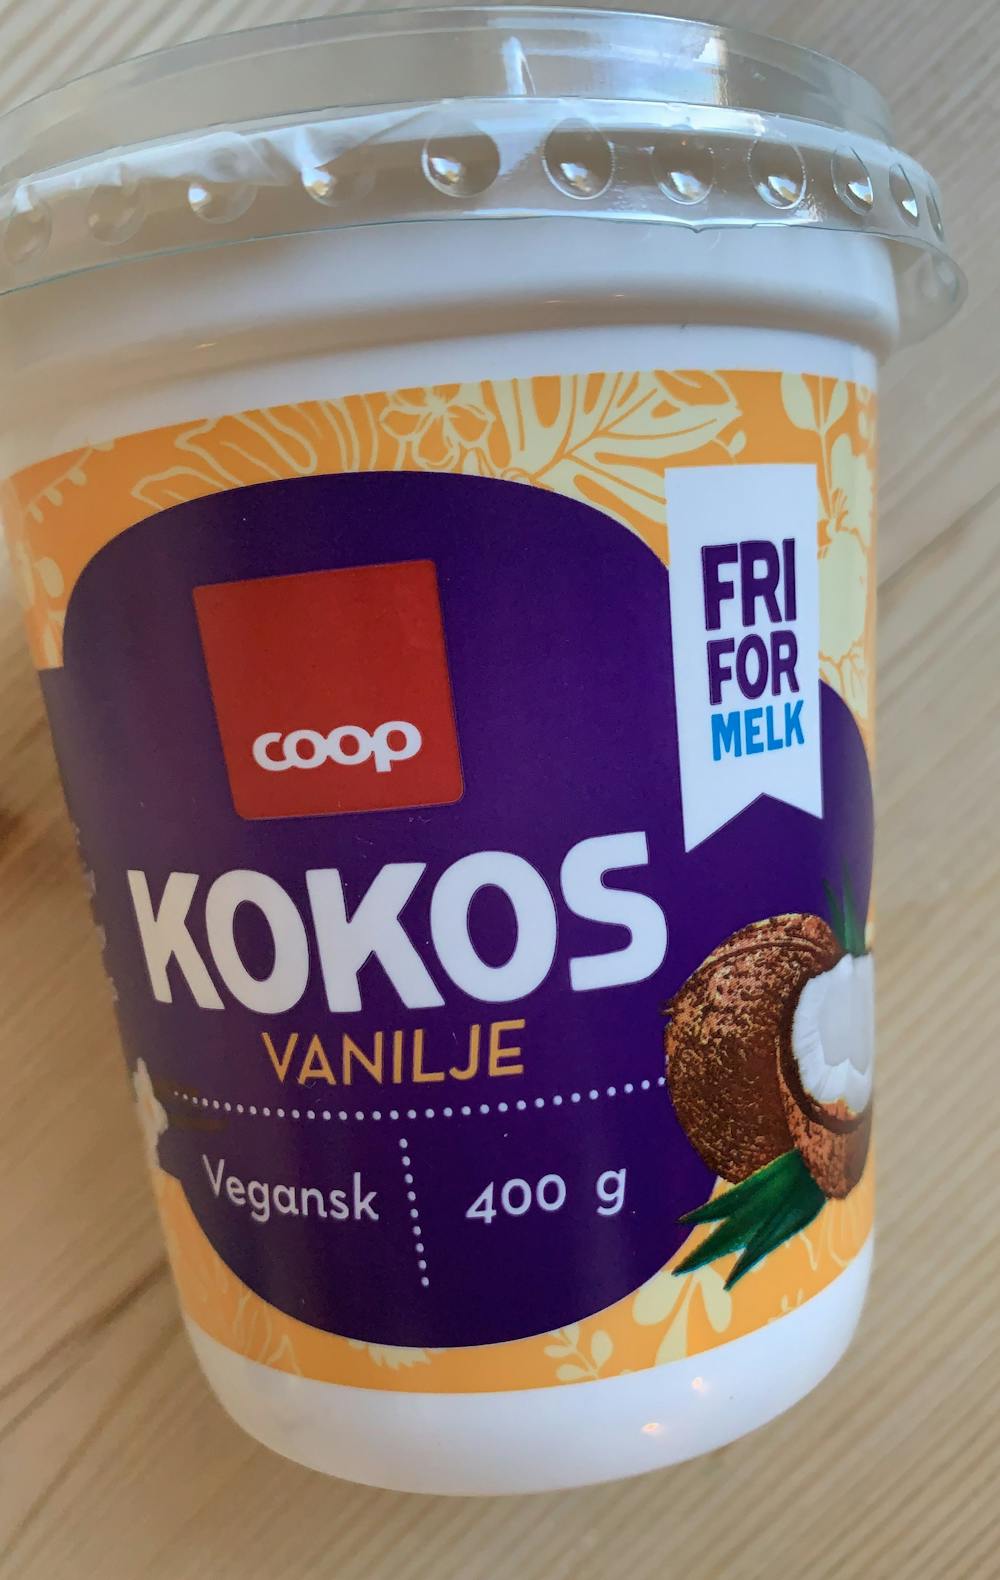 Kokos vanilje, Coop